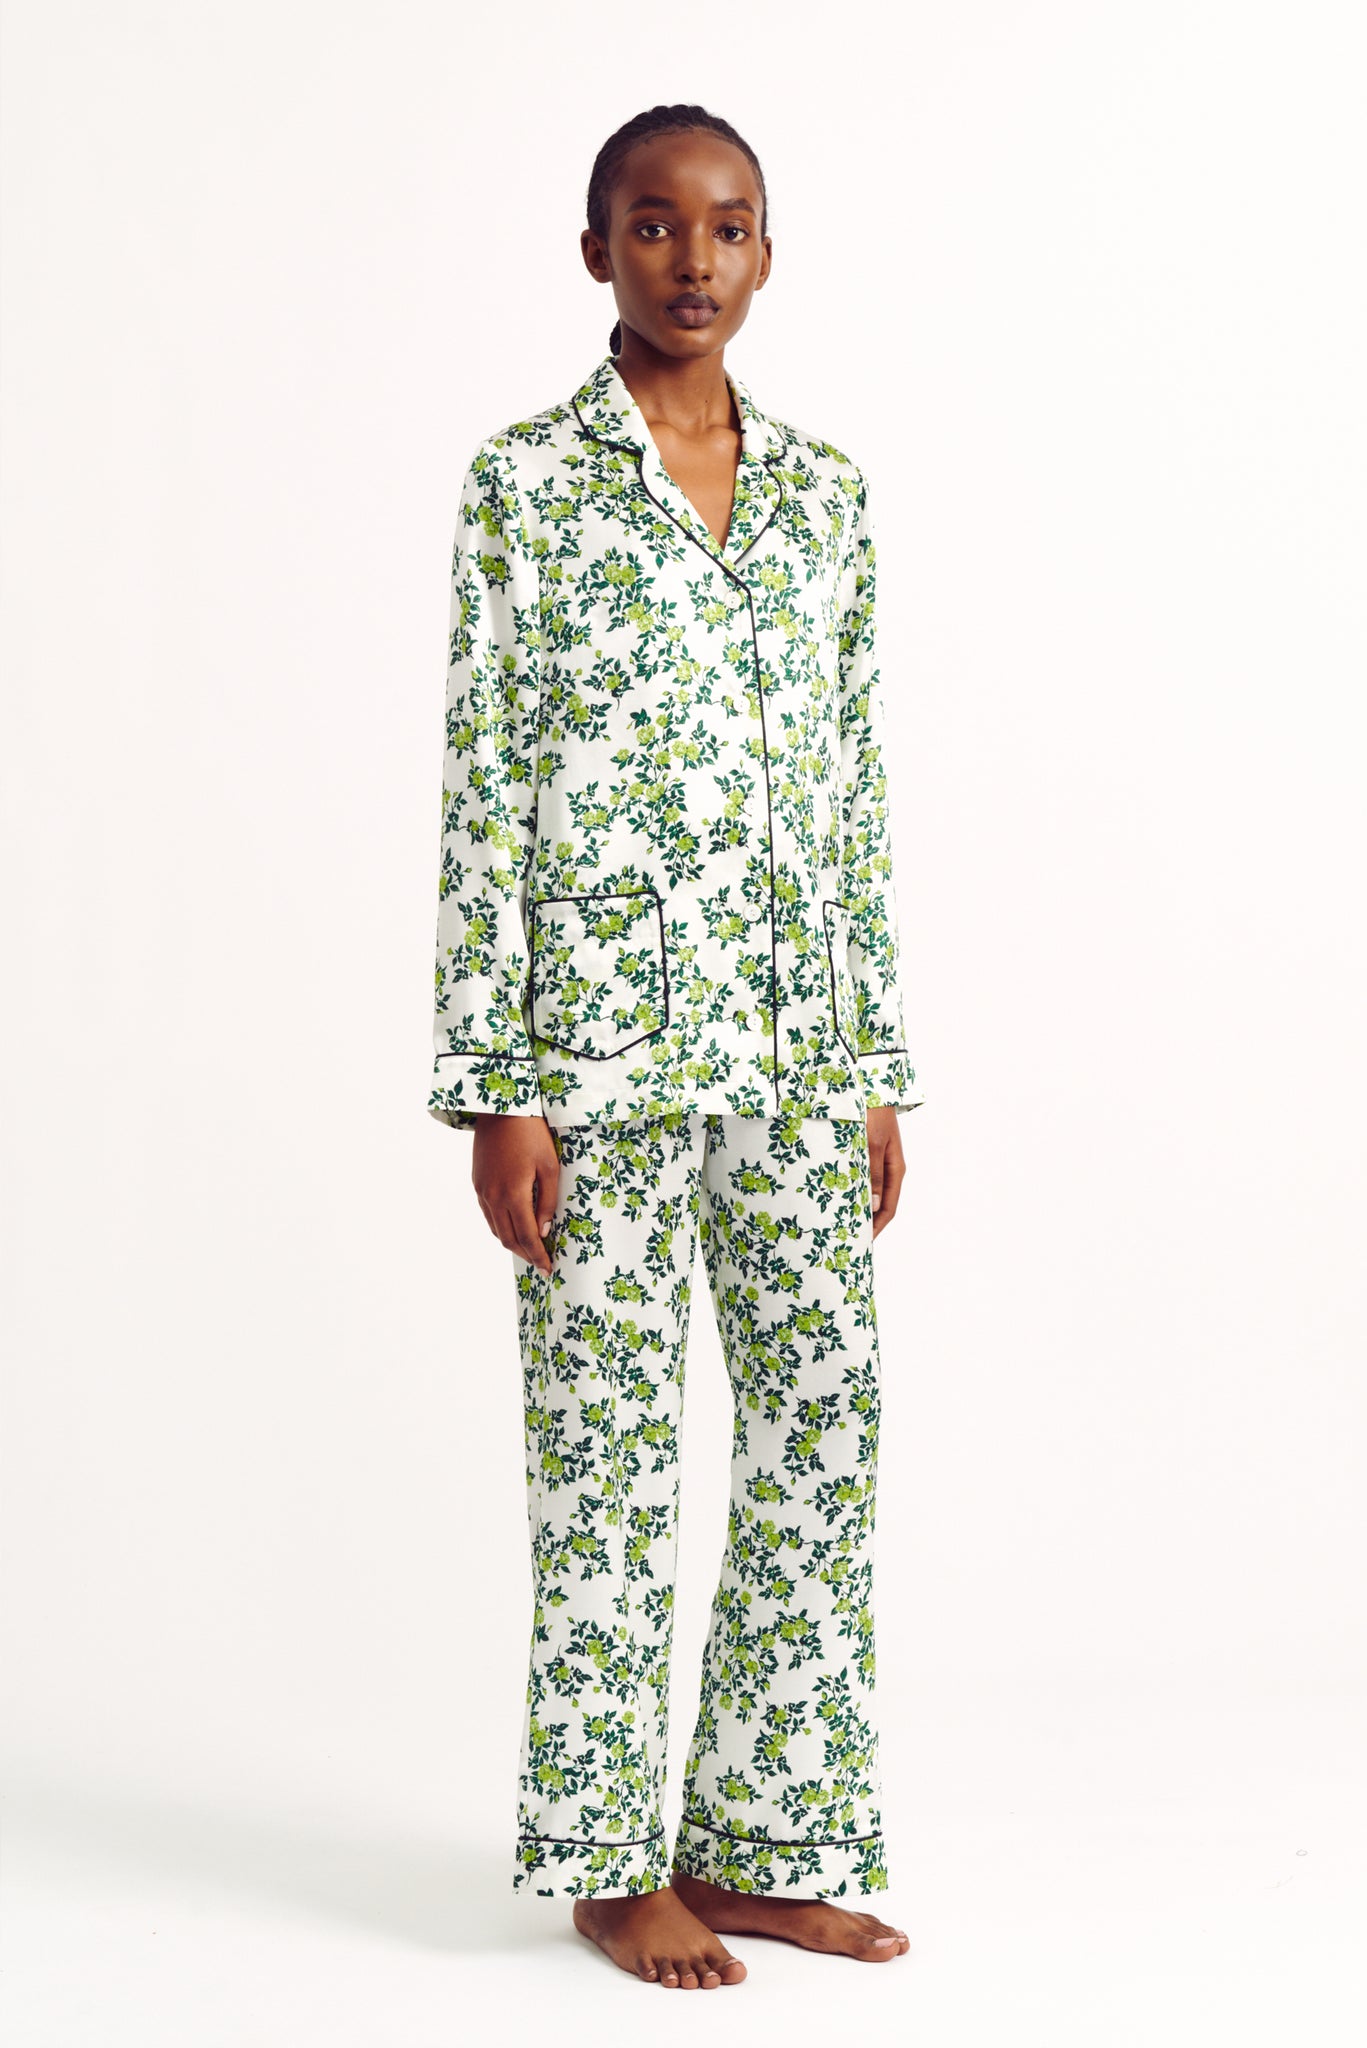 Trina Pyjama Blouse in Chartreuse Roses On Ivory Silk Satin | Emilia Wickstead